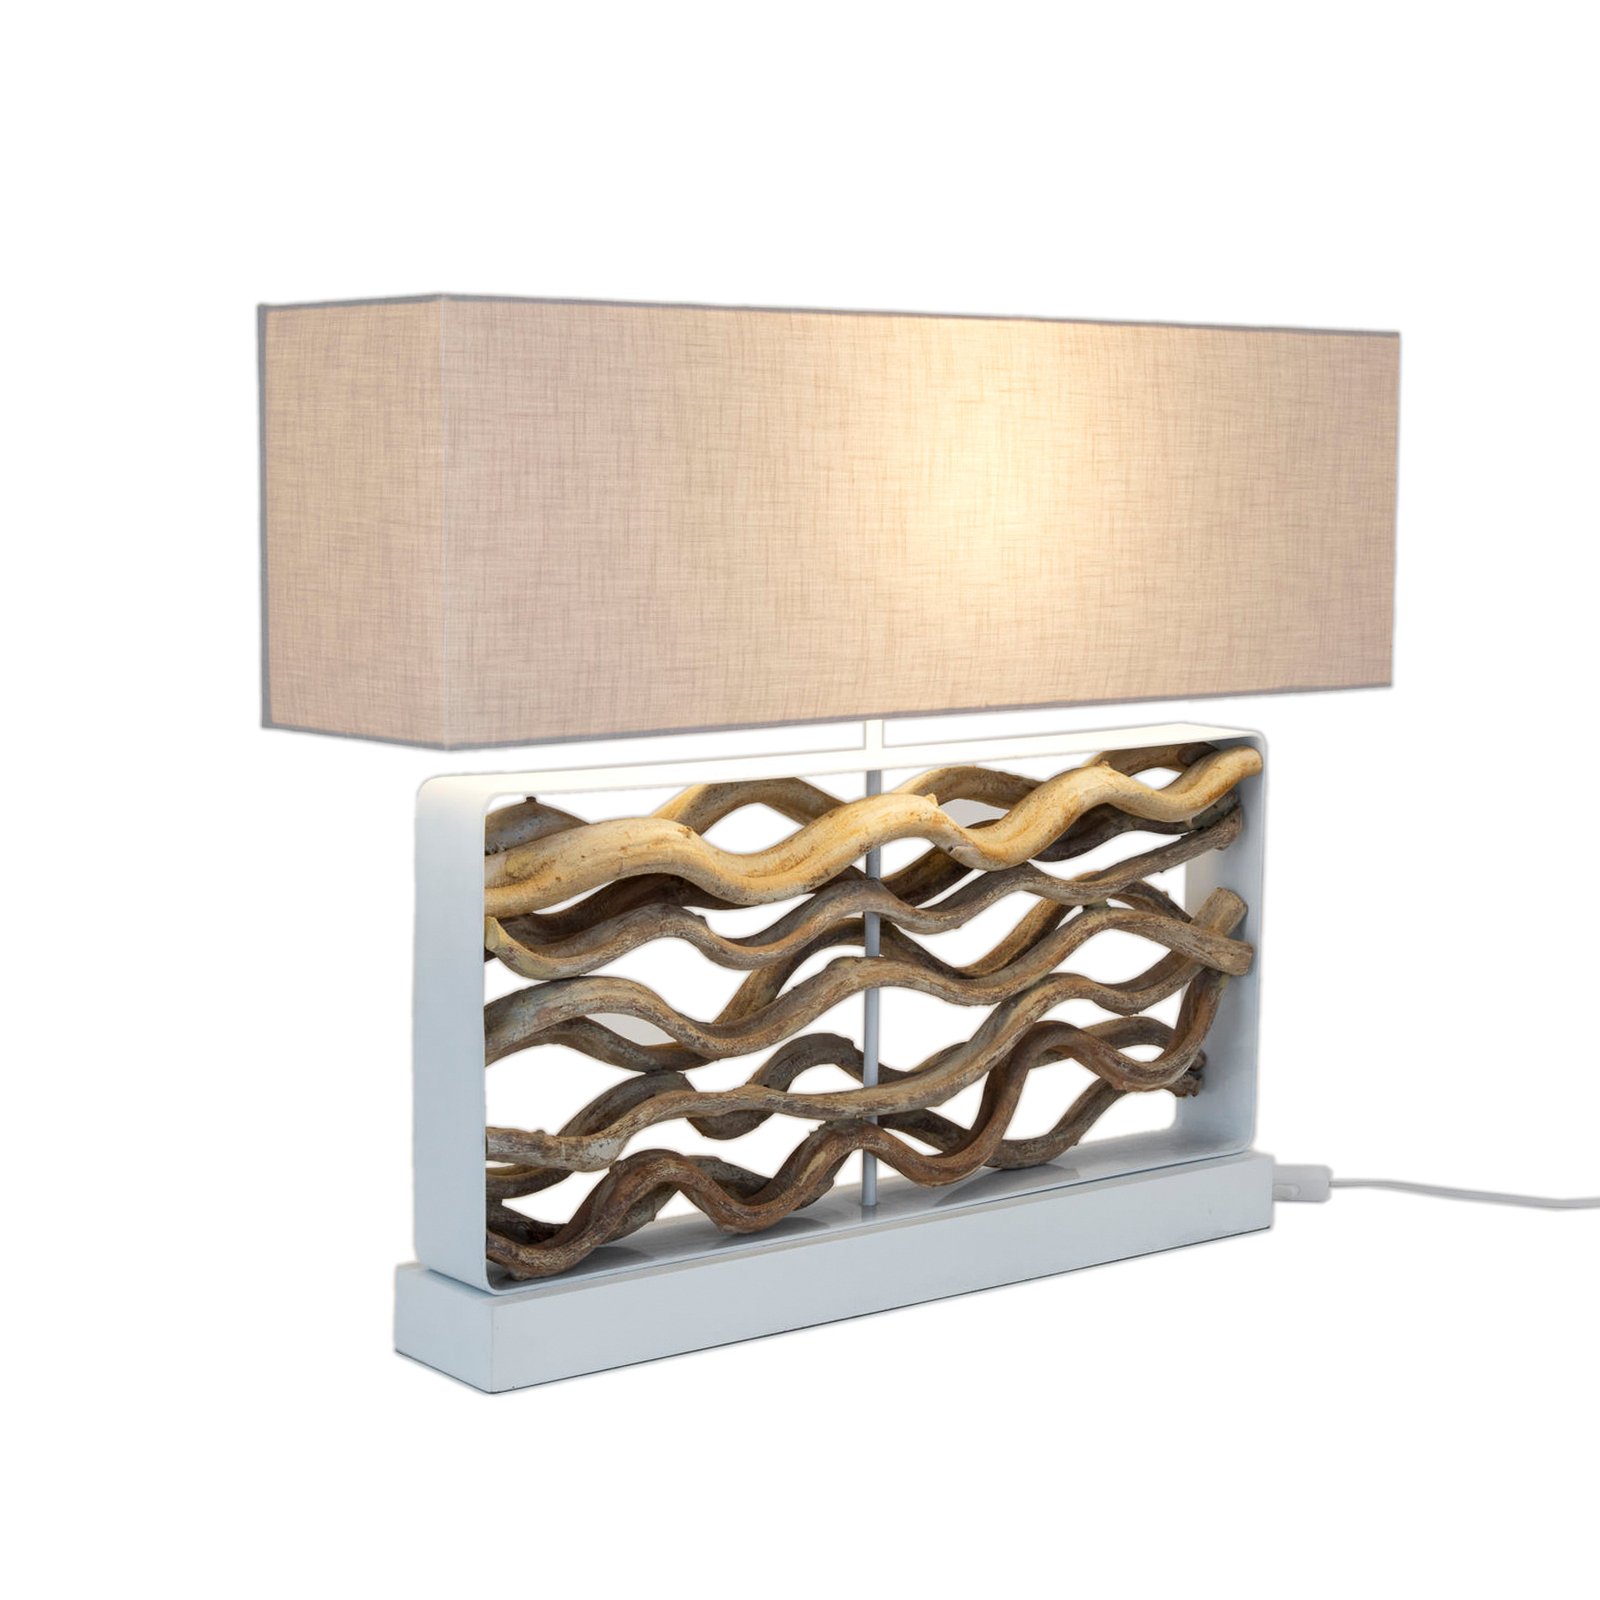 Tremiti table lamp, wood-coloured/beige, height 67 cm, wood